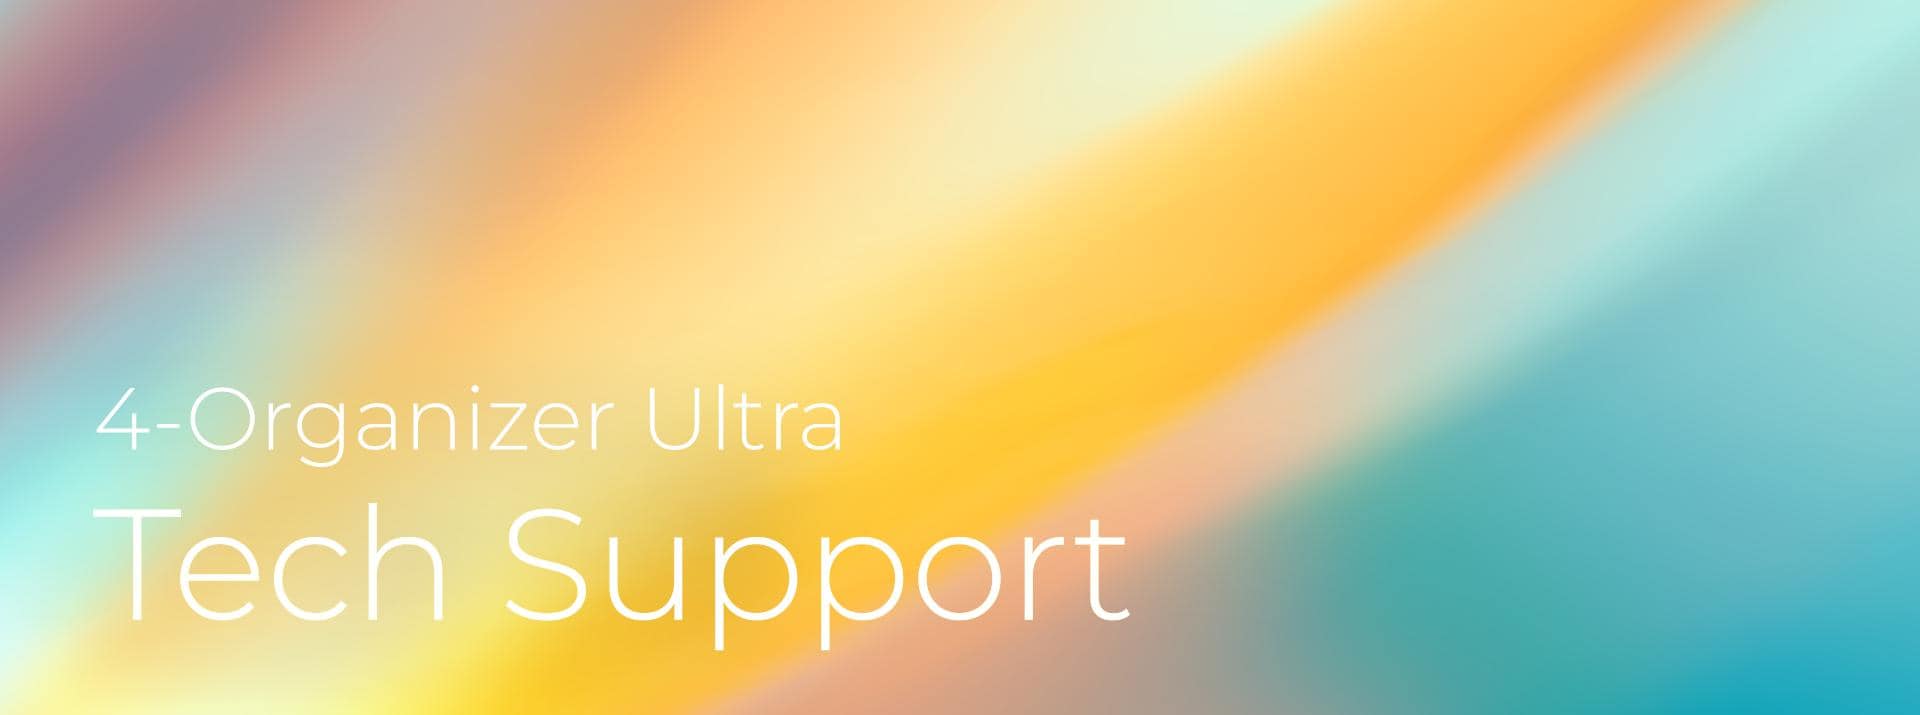 Ambeteco: 4-Organizer Ultra Support